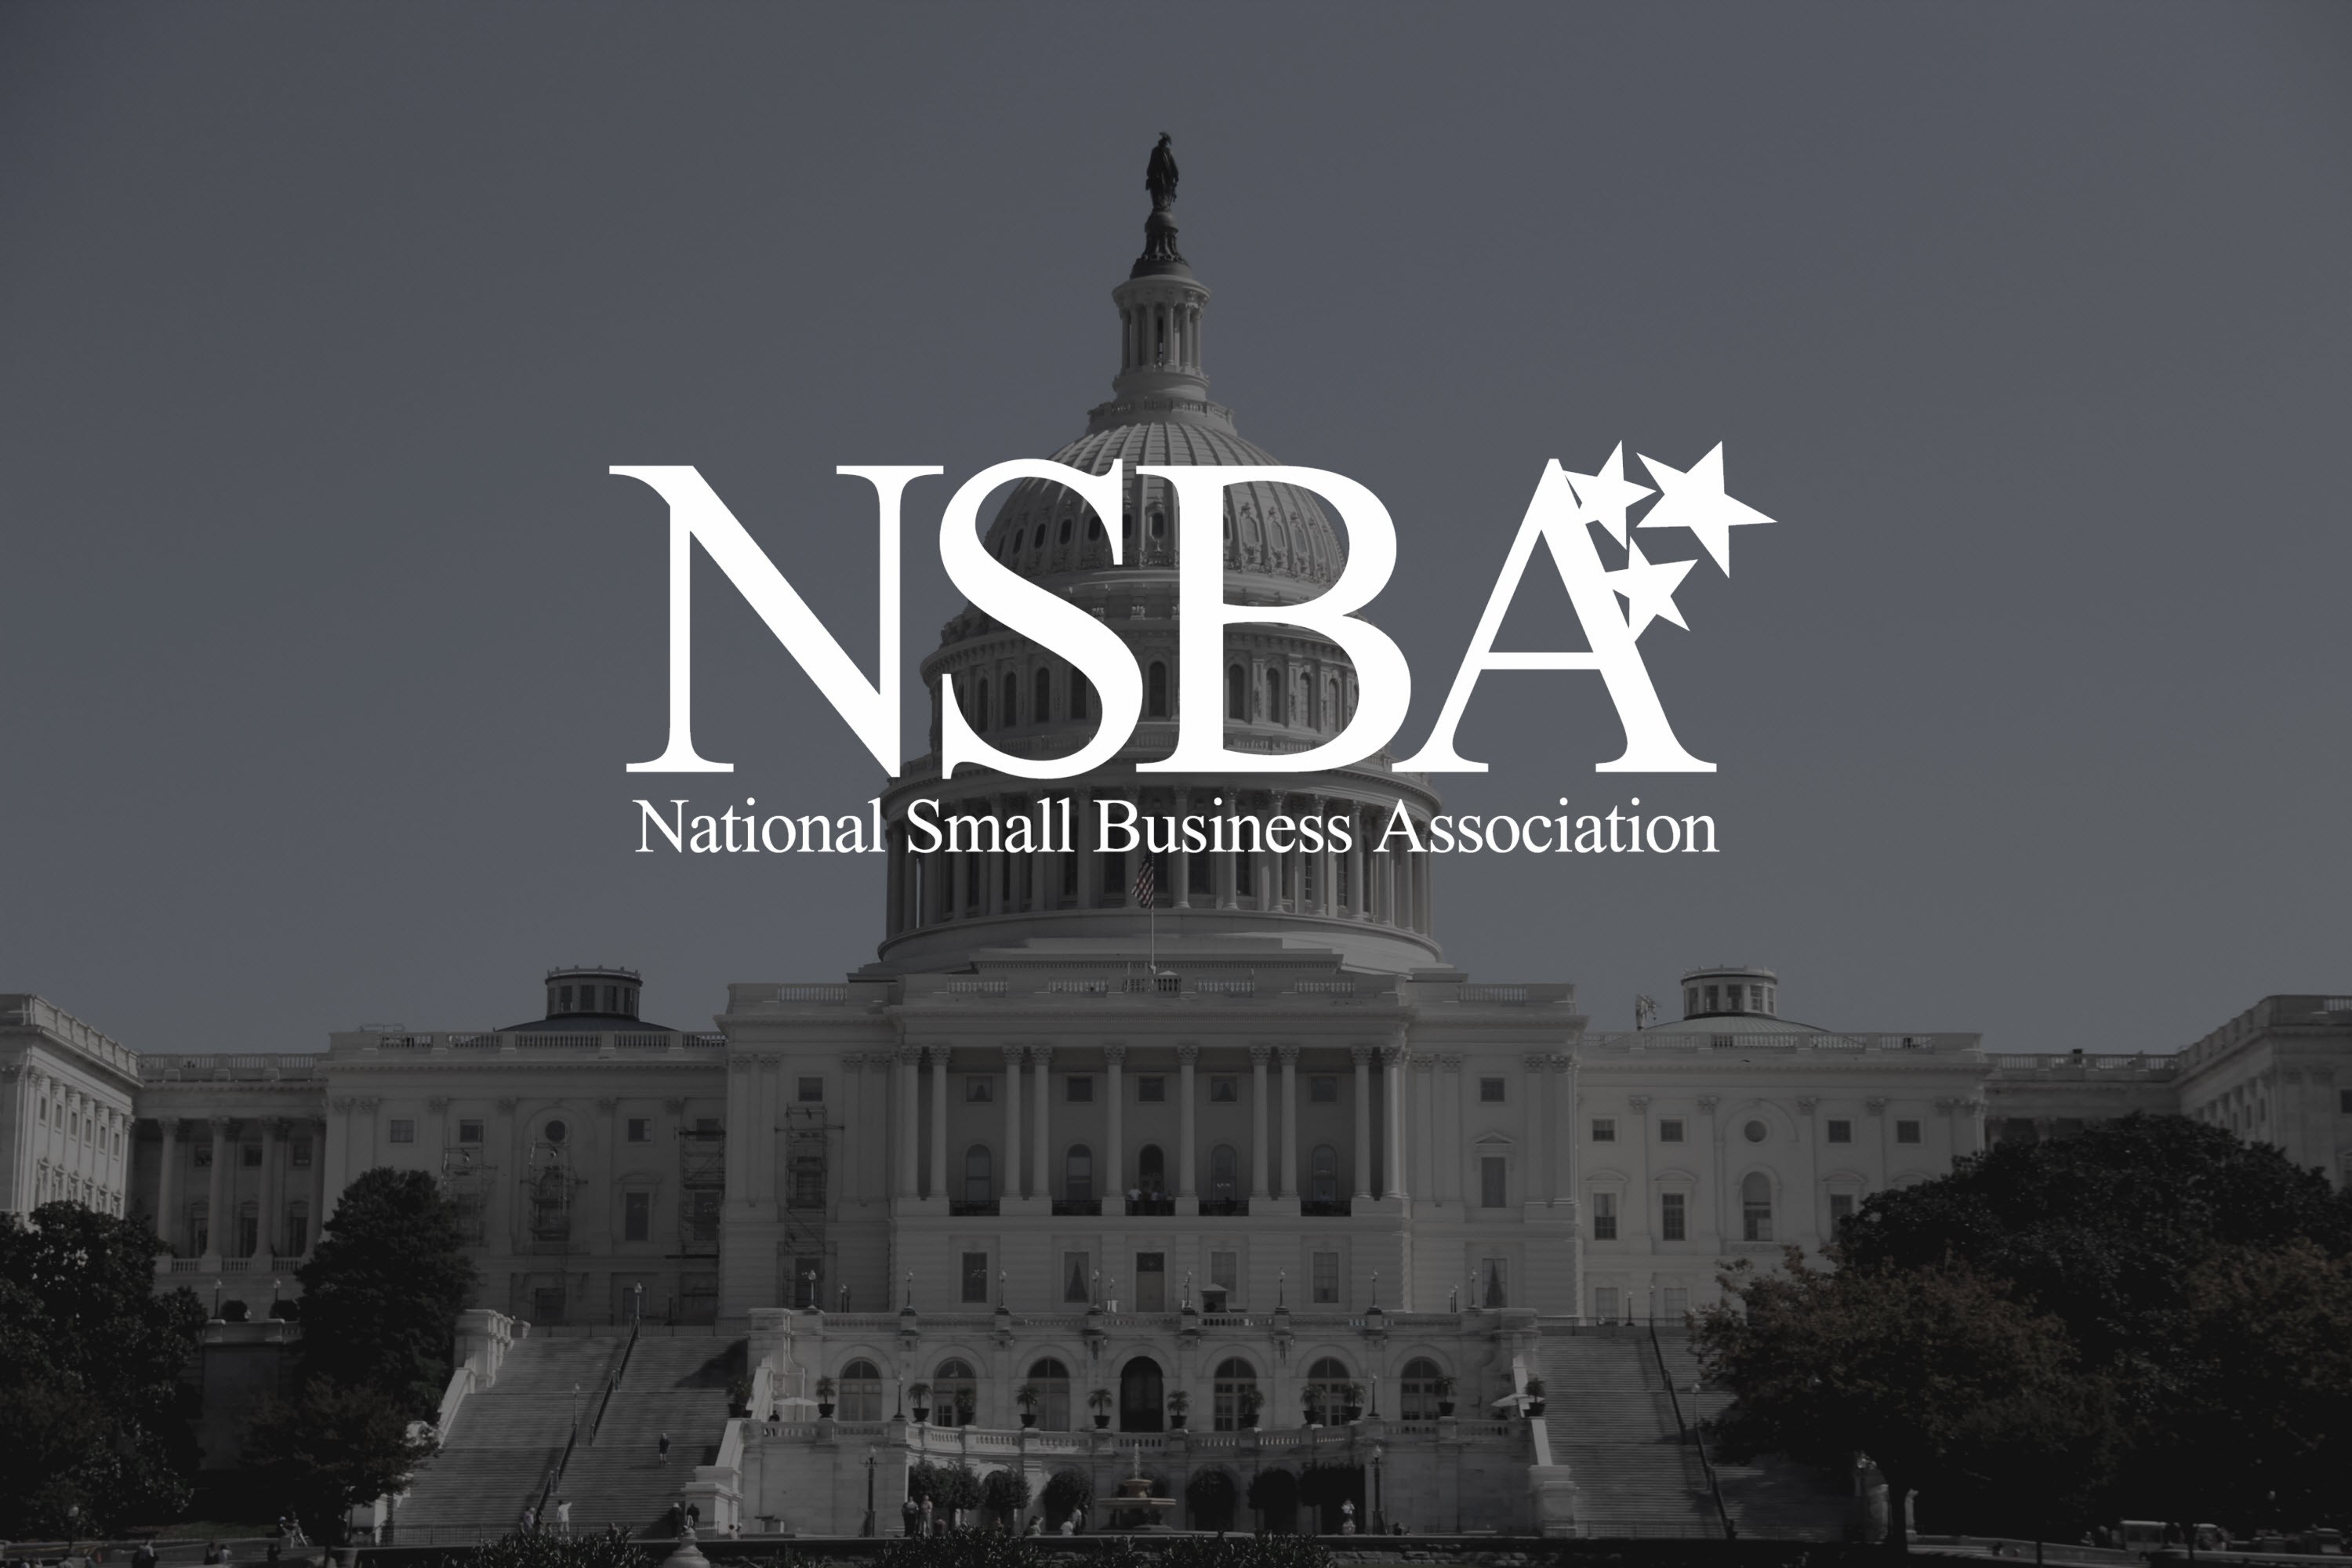 National Small Business Association | LinkedIn